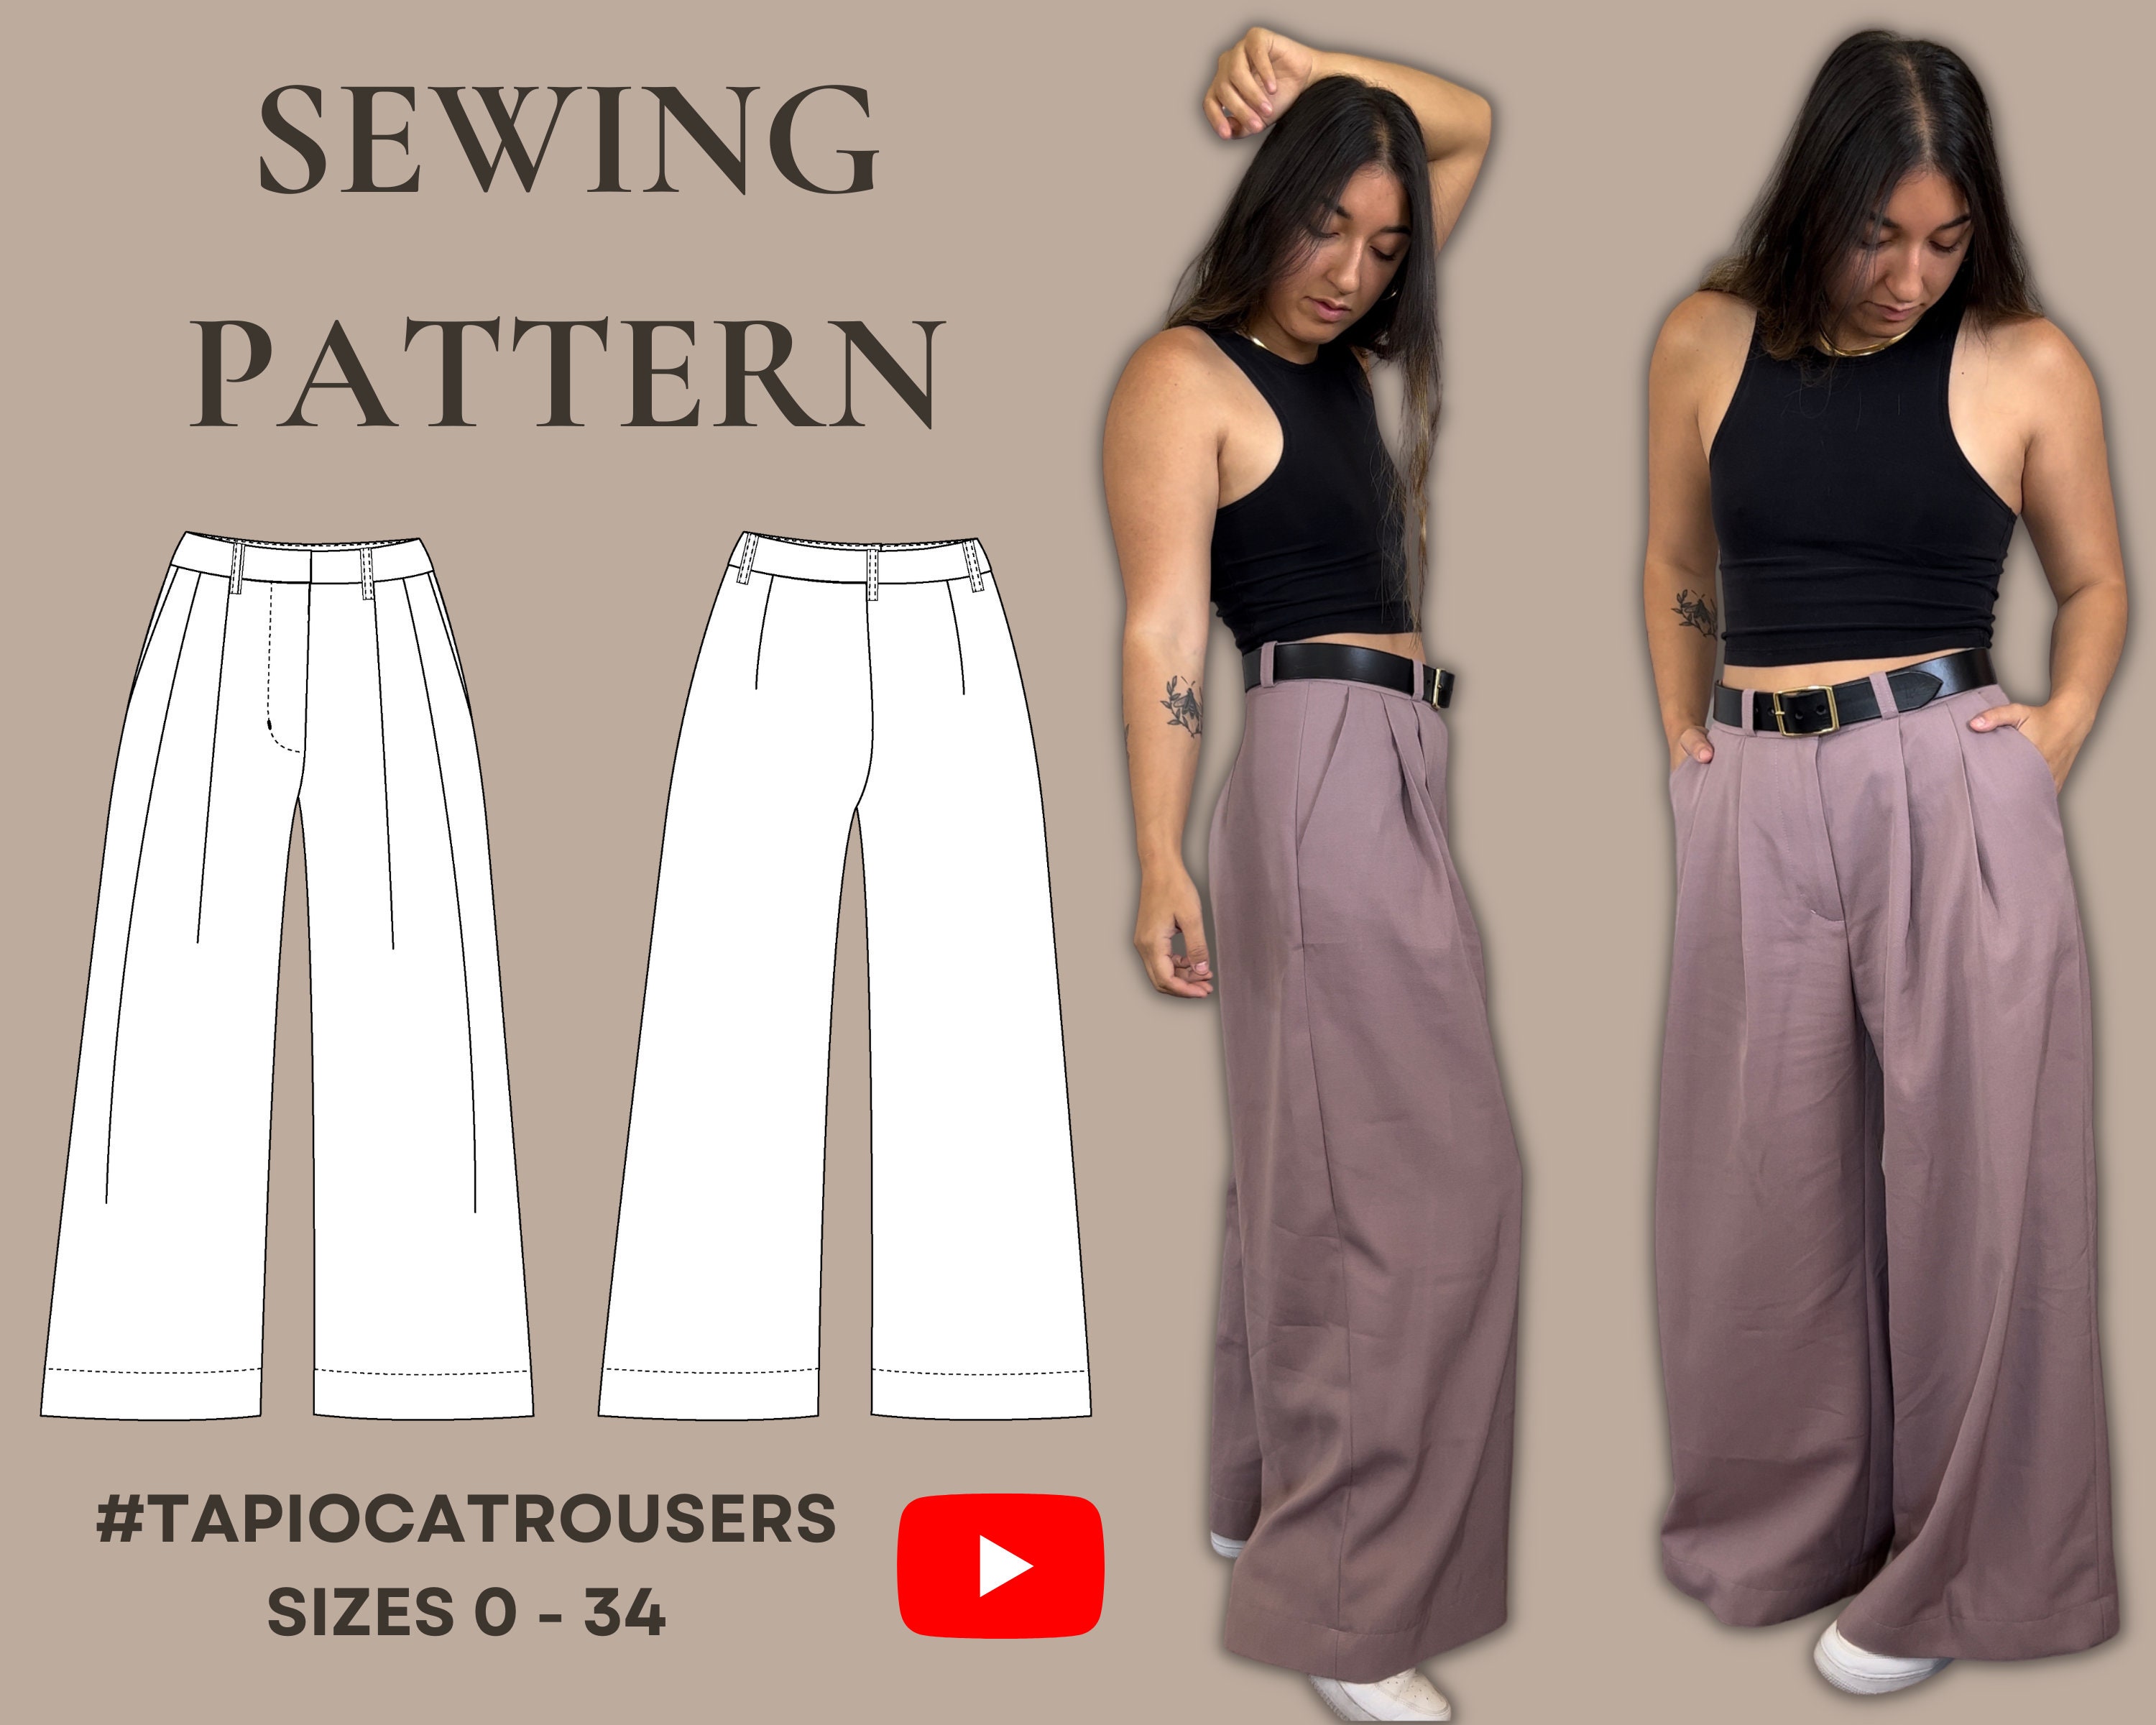 Jill Wrap Skirt PDF Sewing Pattern, Size Inclusive 0-34, Beginner-friendly  Detailed Video Tutorial, Maxi Skirt, Mini Skirt, Wrap Around 